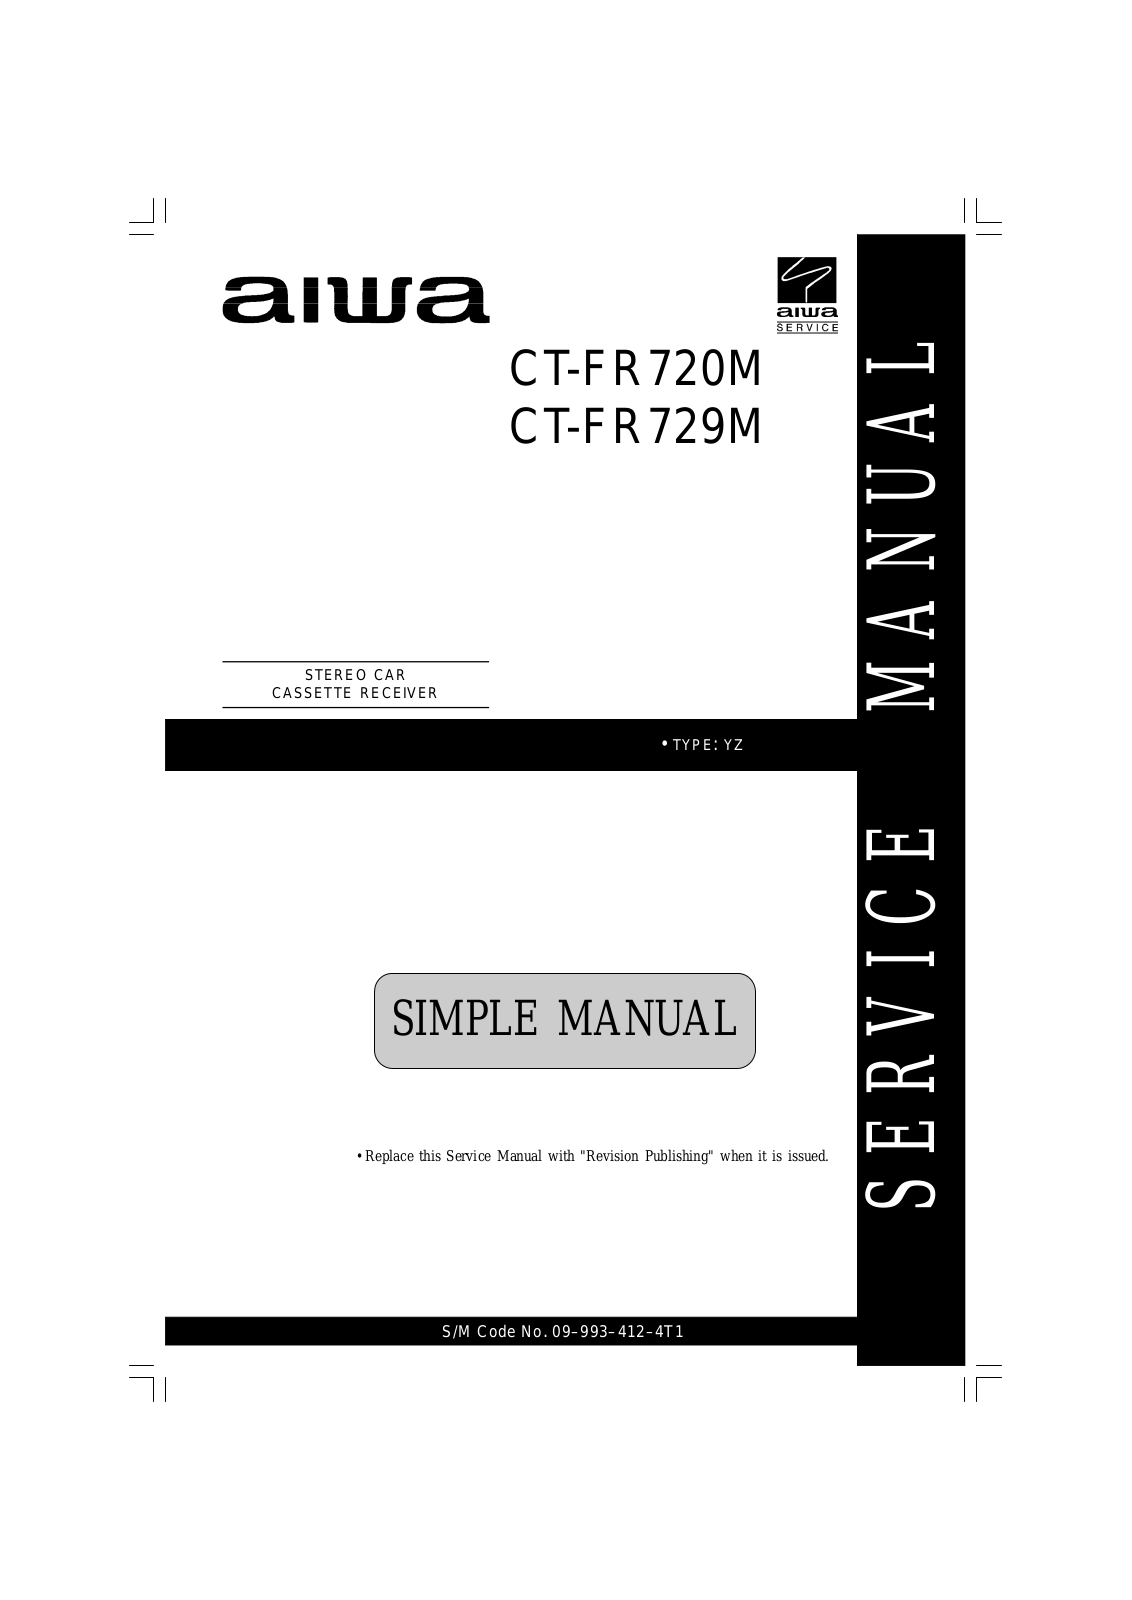 Aiwa CTFR-720-M, CTFR-729-M Service manual